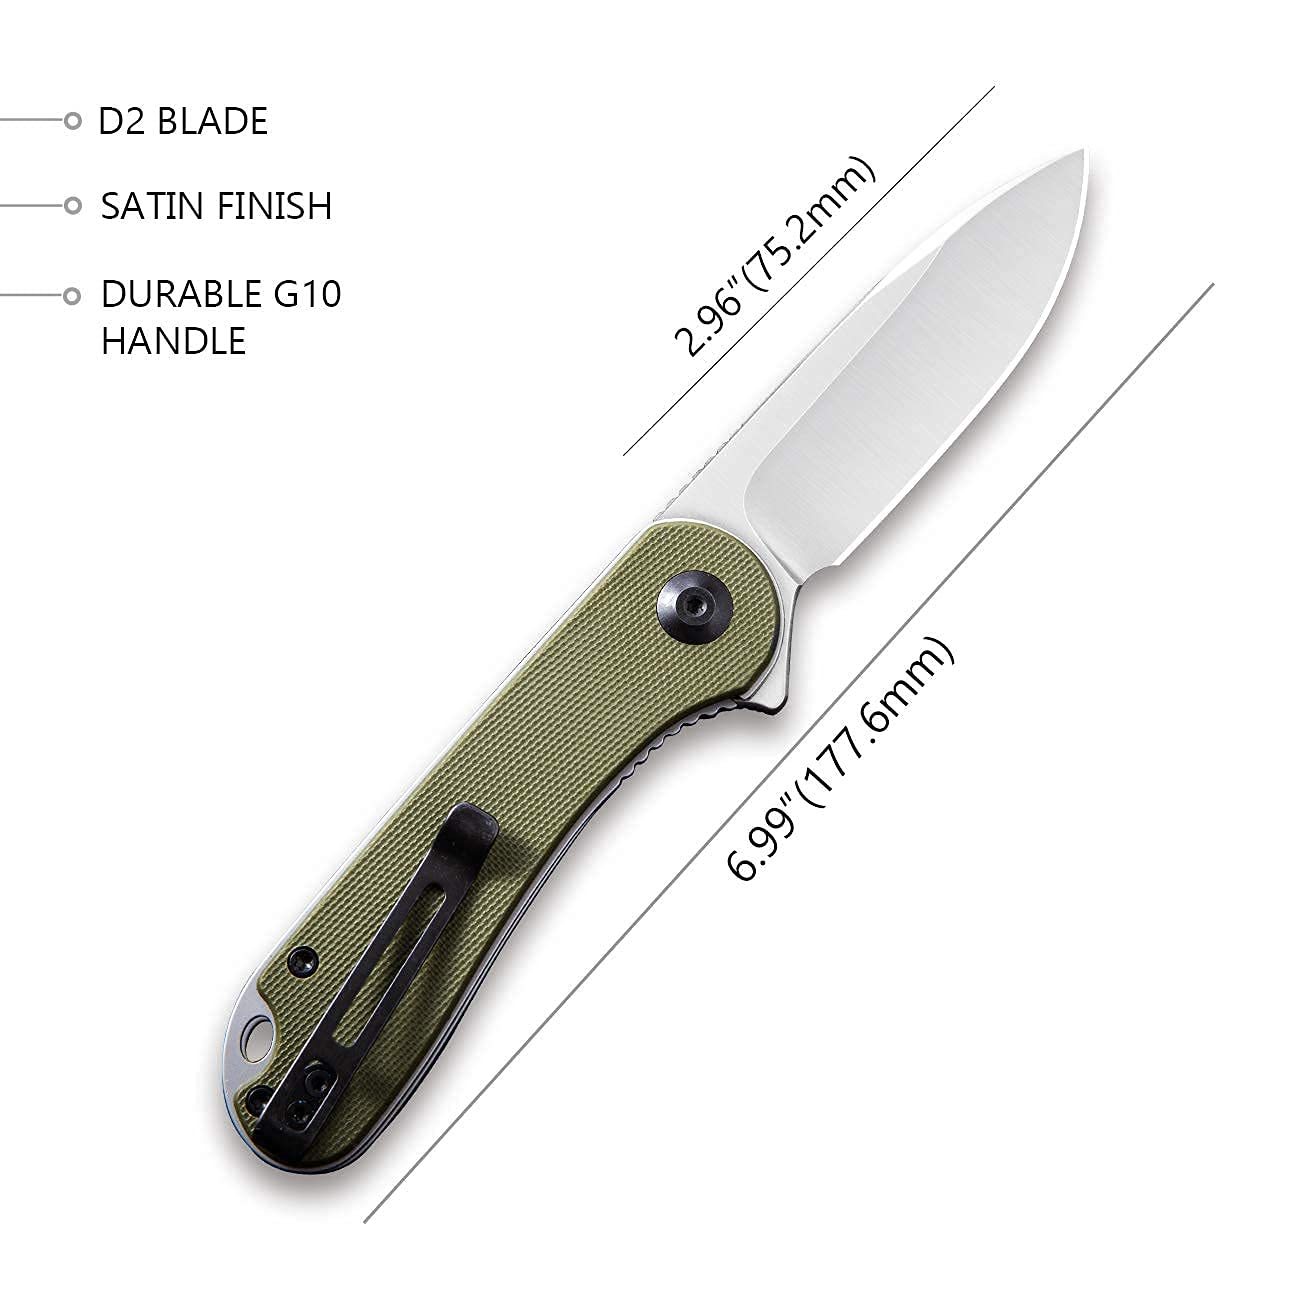 CIVIVI Elementum Green G10 Handle Bundled with New Blue G10 Handle Version, Great EDC folding Knife Companion